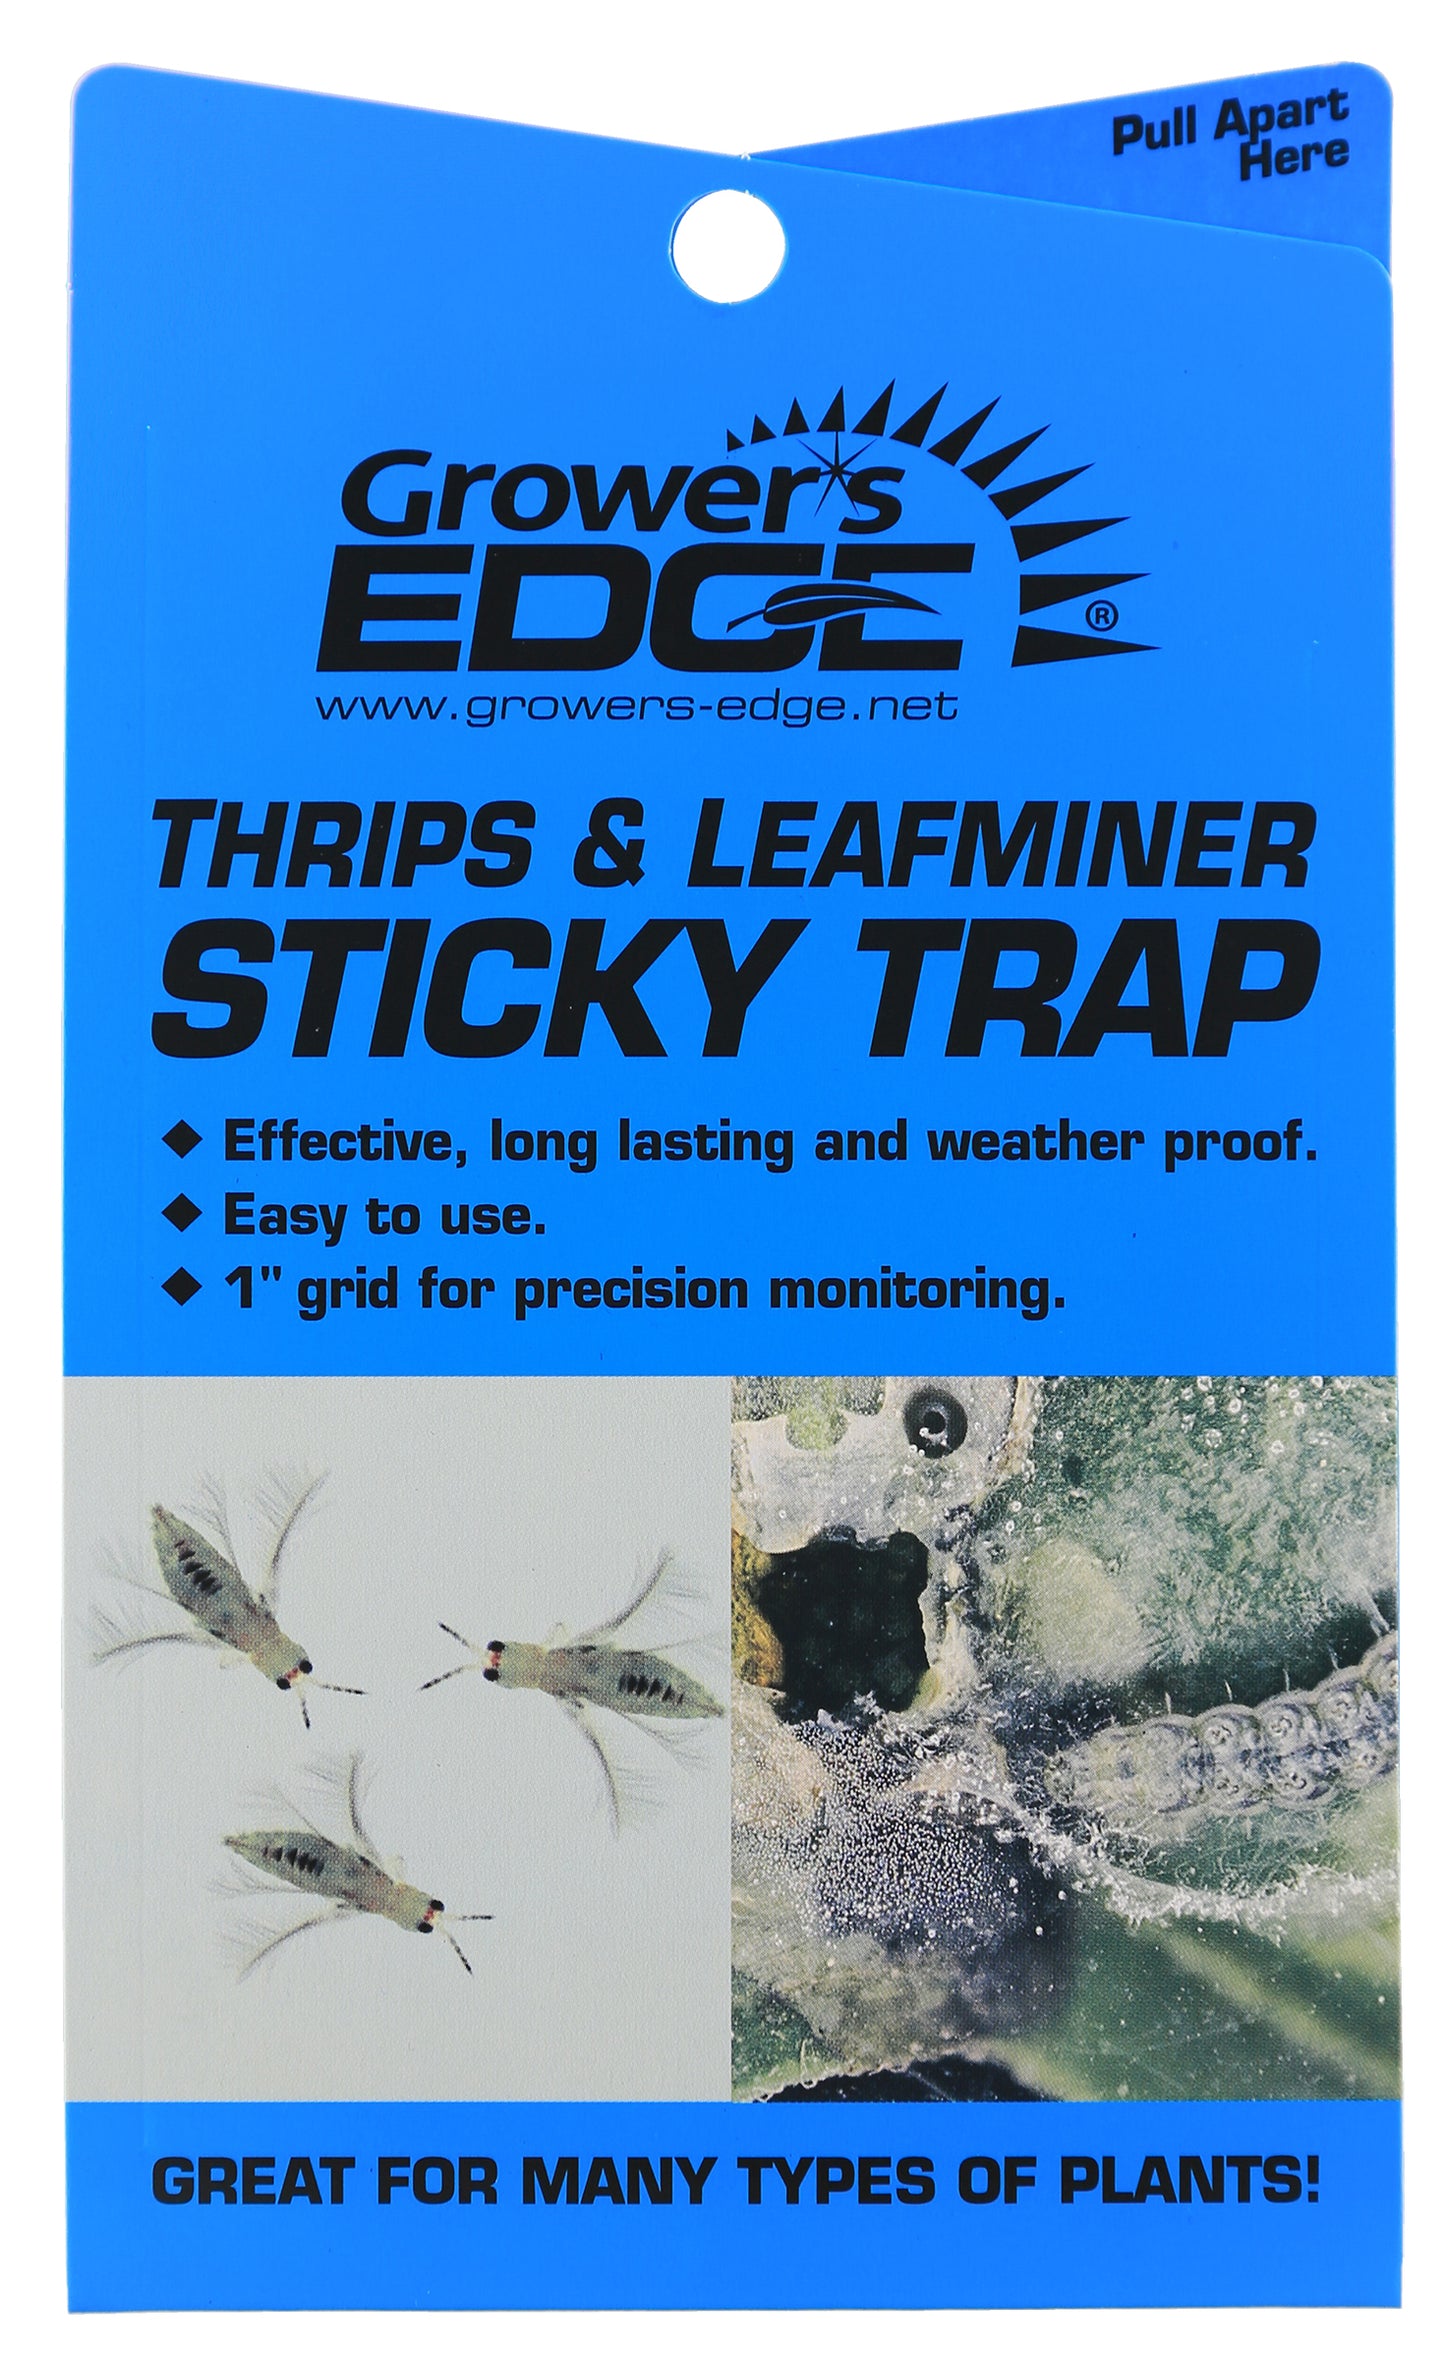 Grower's Edge Thrips & Leafmine